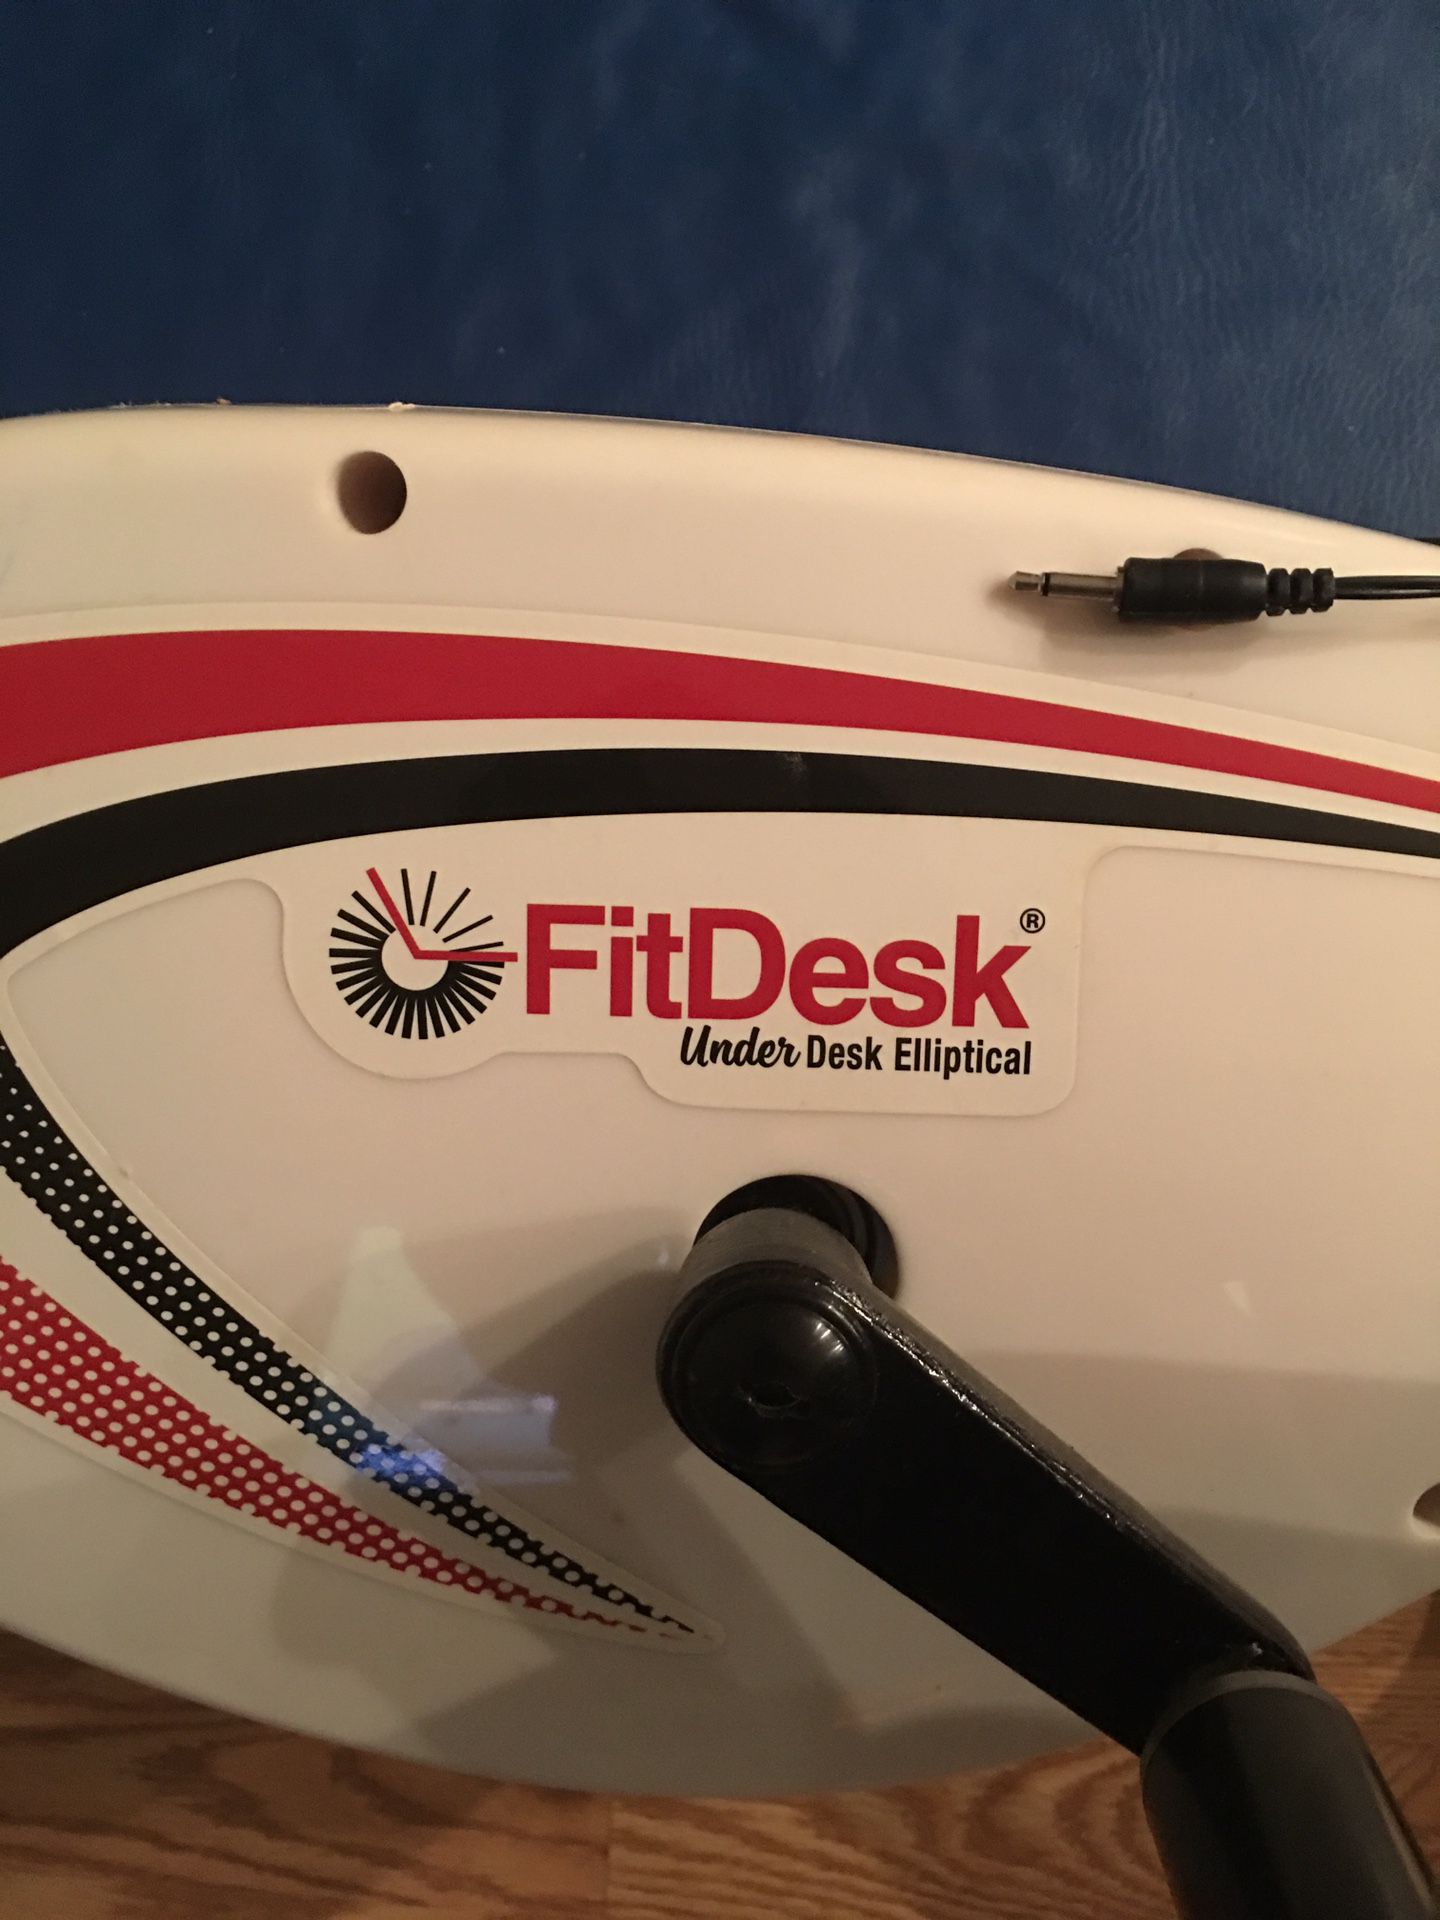 FitDesk Under Desk Elliptical Trainer